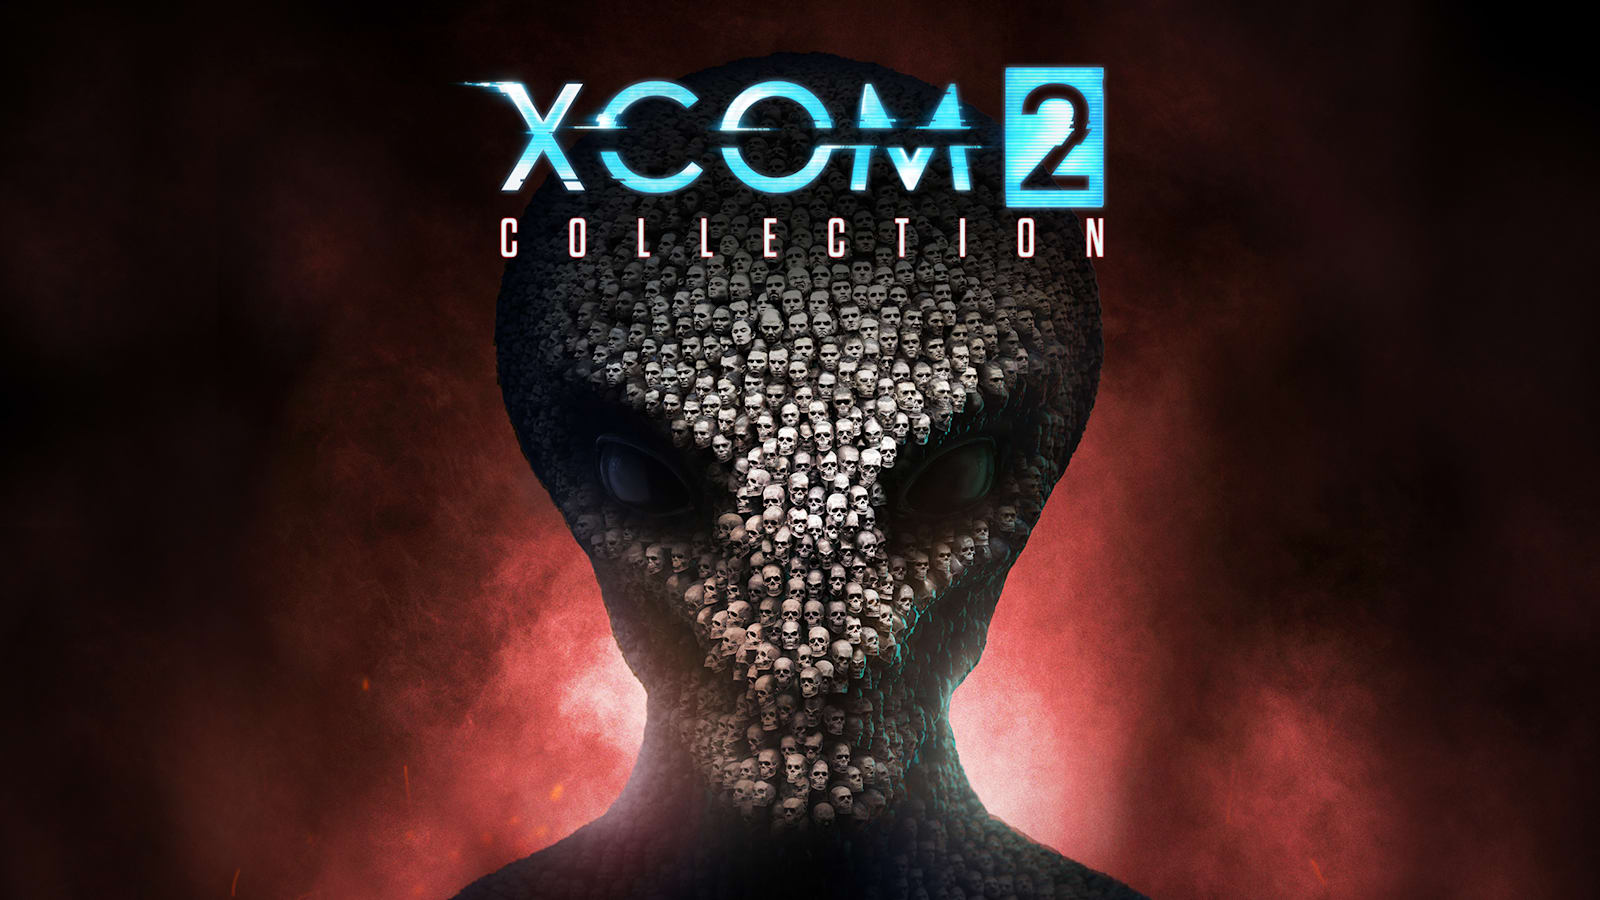 XCOM 2 Collection (Nintendo Switch Digital Download) $7.49